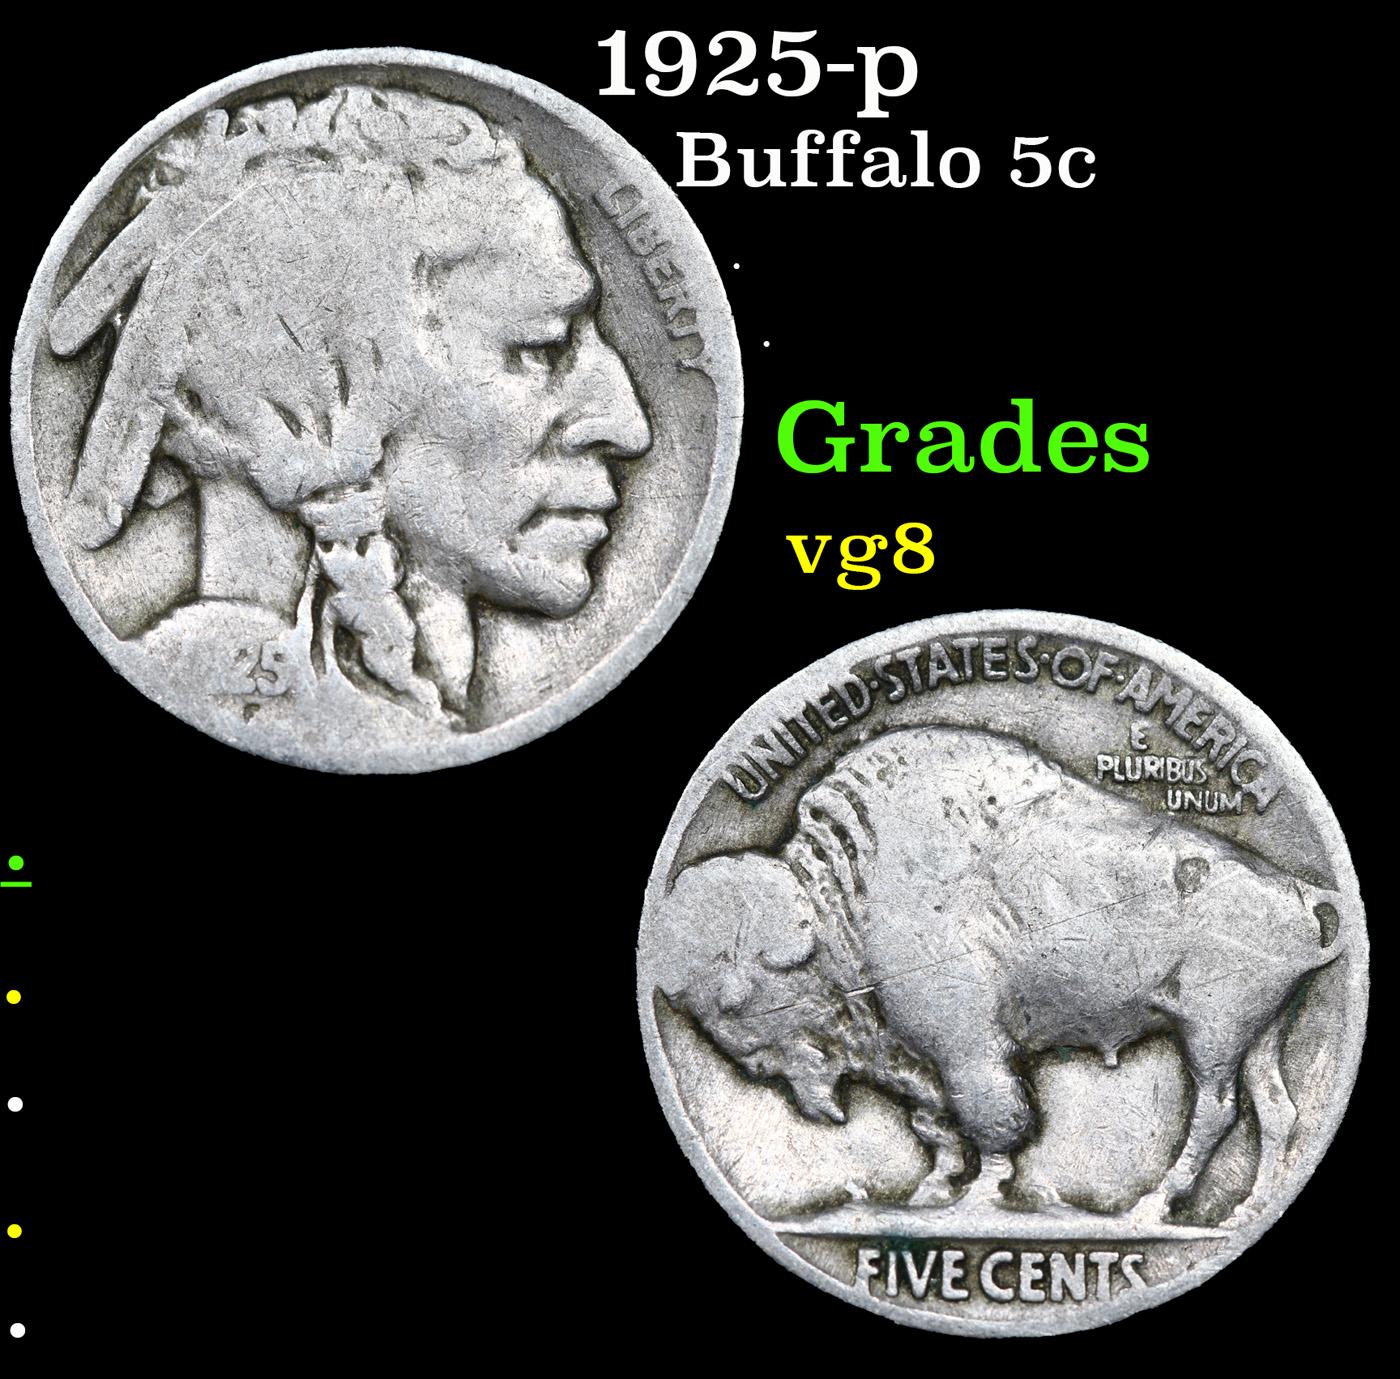 1925-p Buffalo Nickel 5c Grades vg, very good